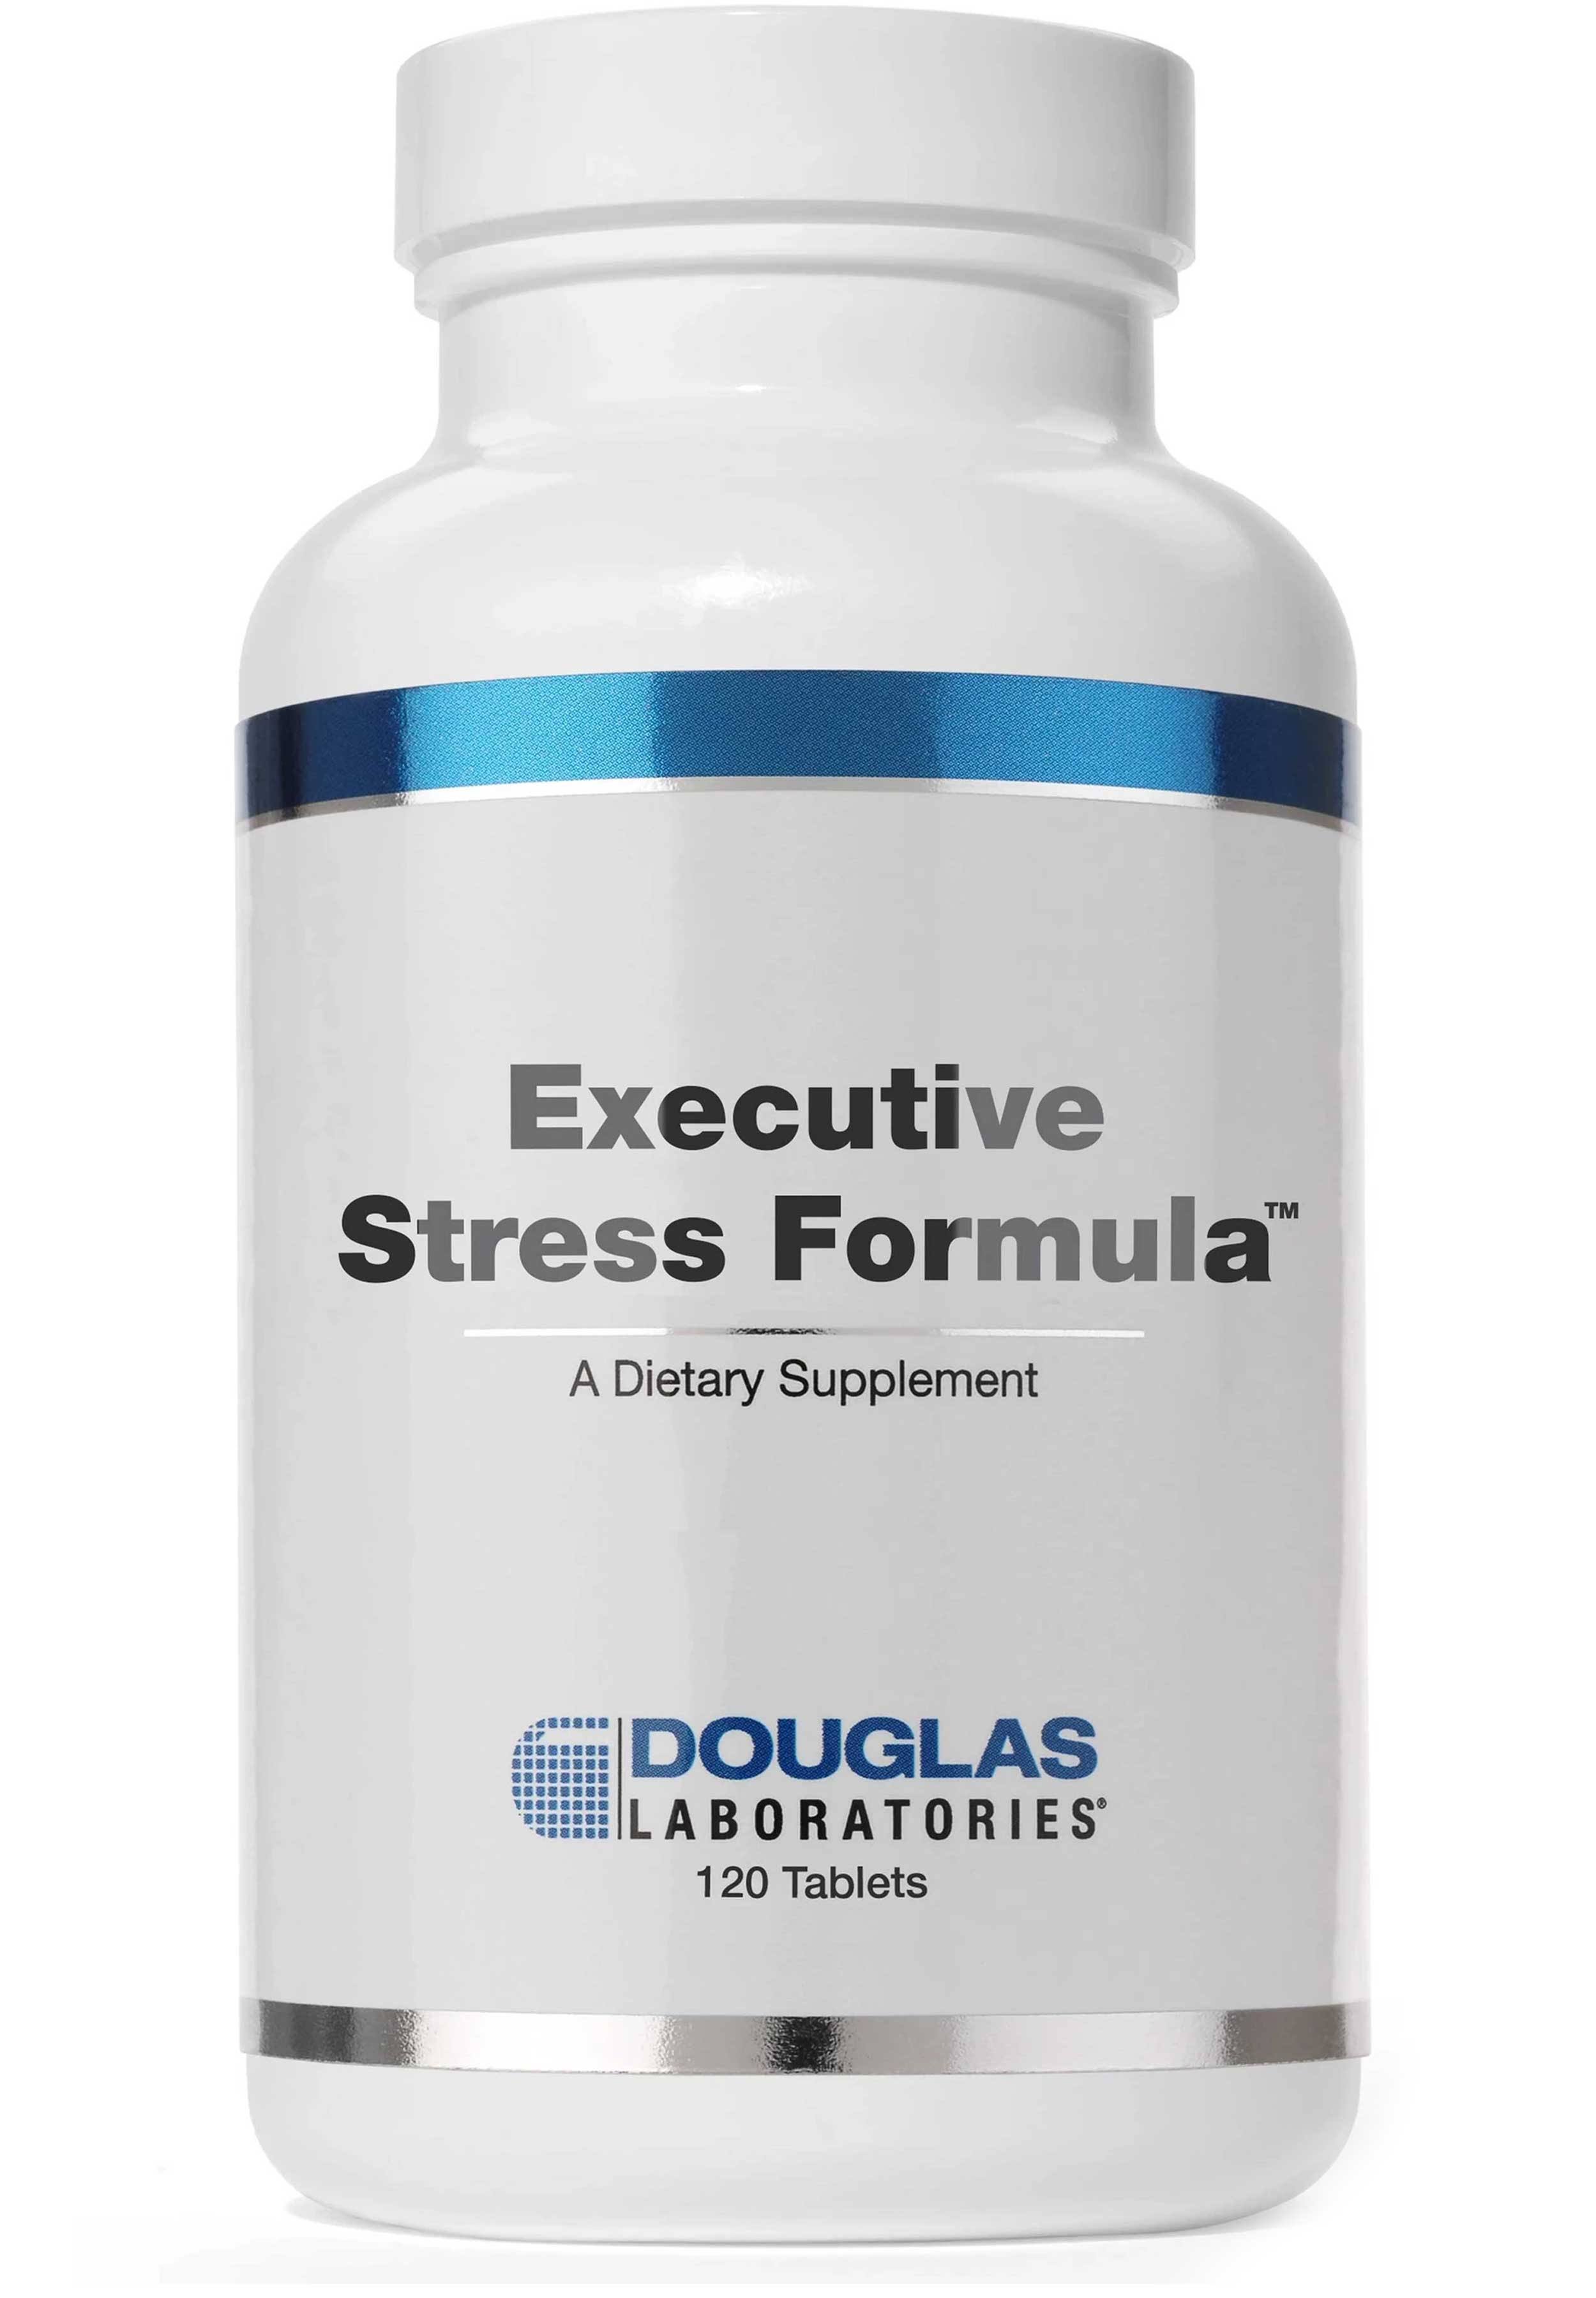 Douglas Laboratories - Executive Stress Formula - 120 Tablets